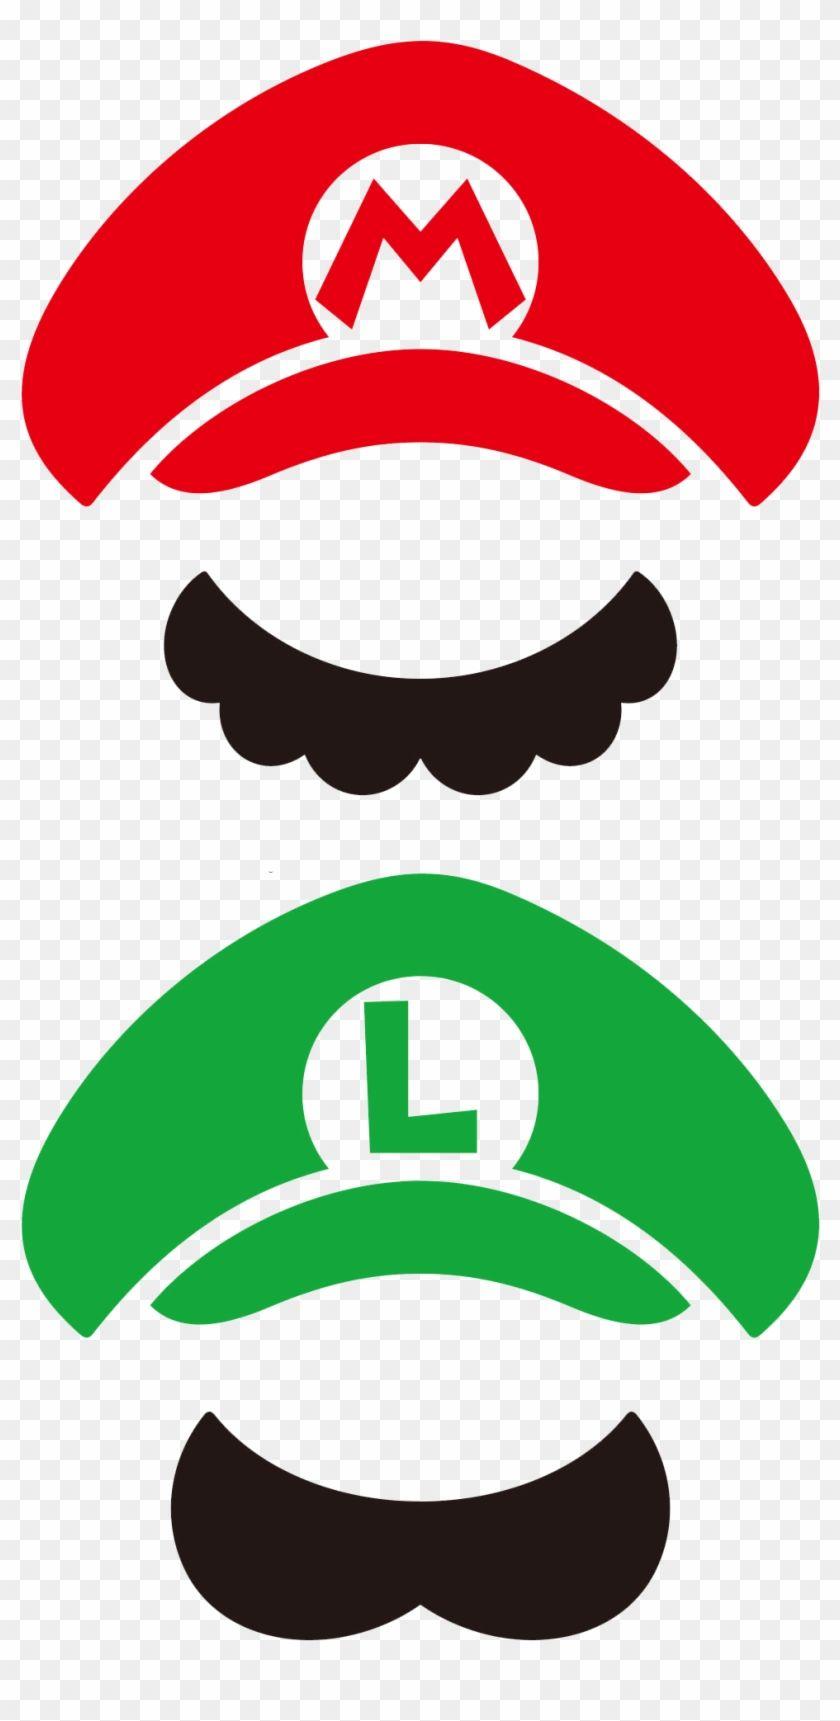 Mario and Luigi Logo - New Super Mario Bros - Super Mario Bros Mario Y Luigi Png - Free ...